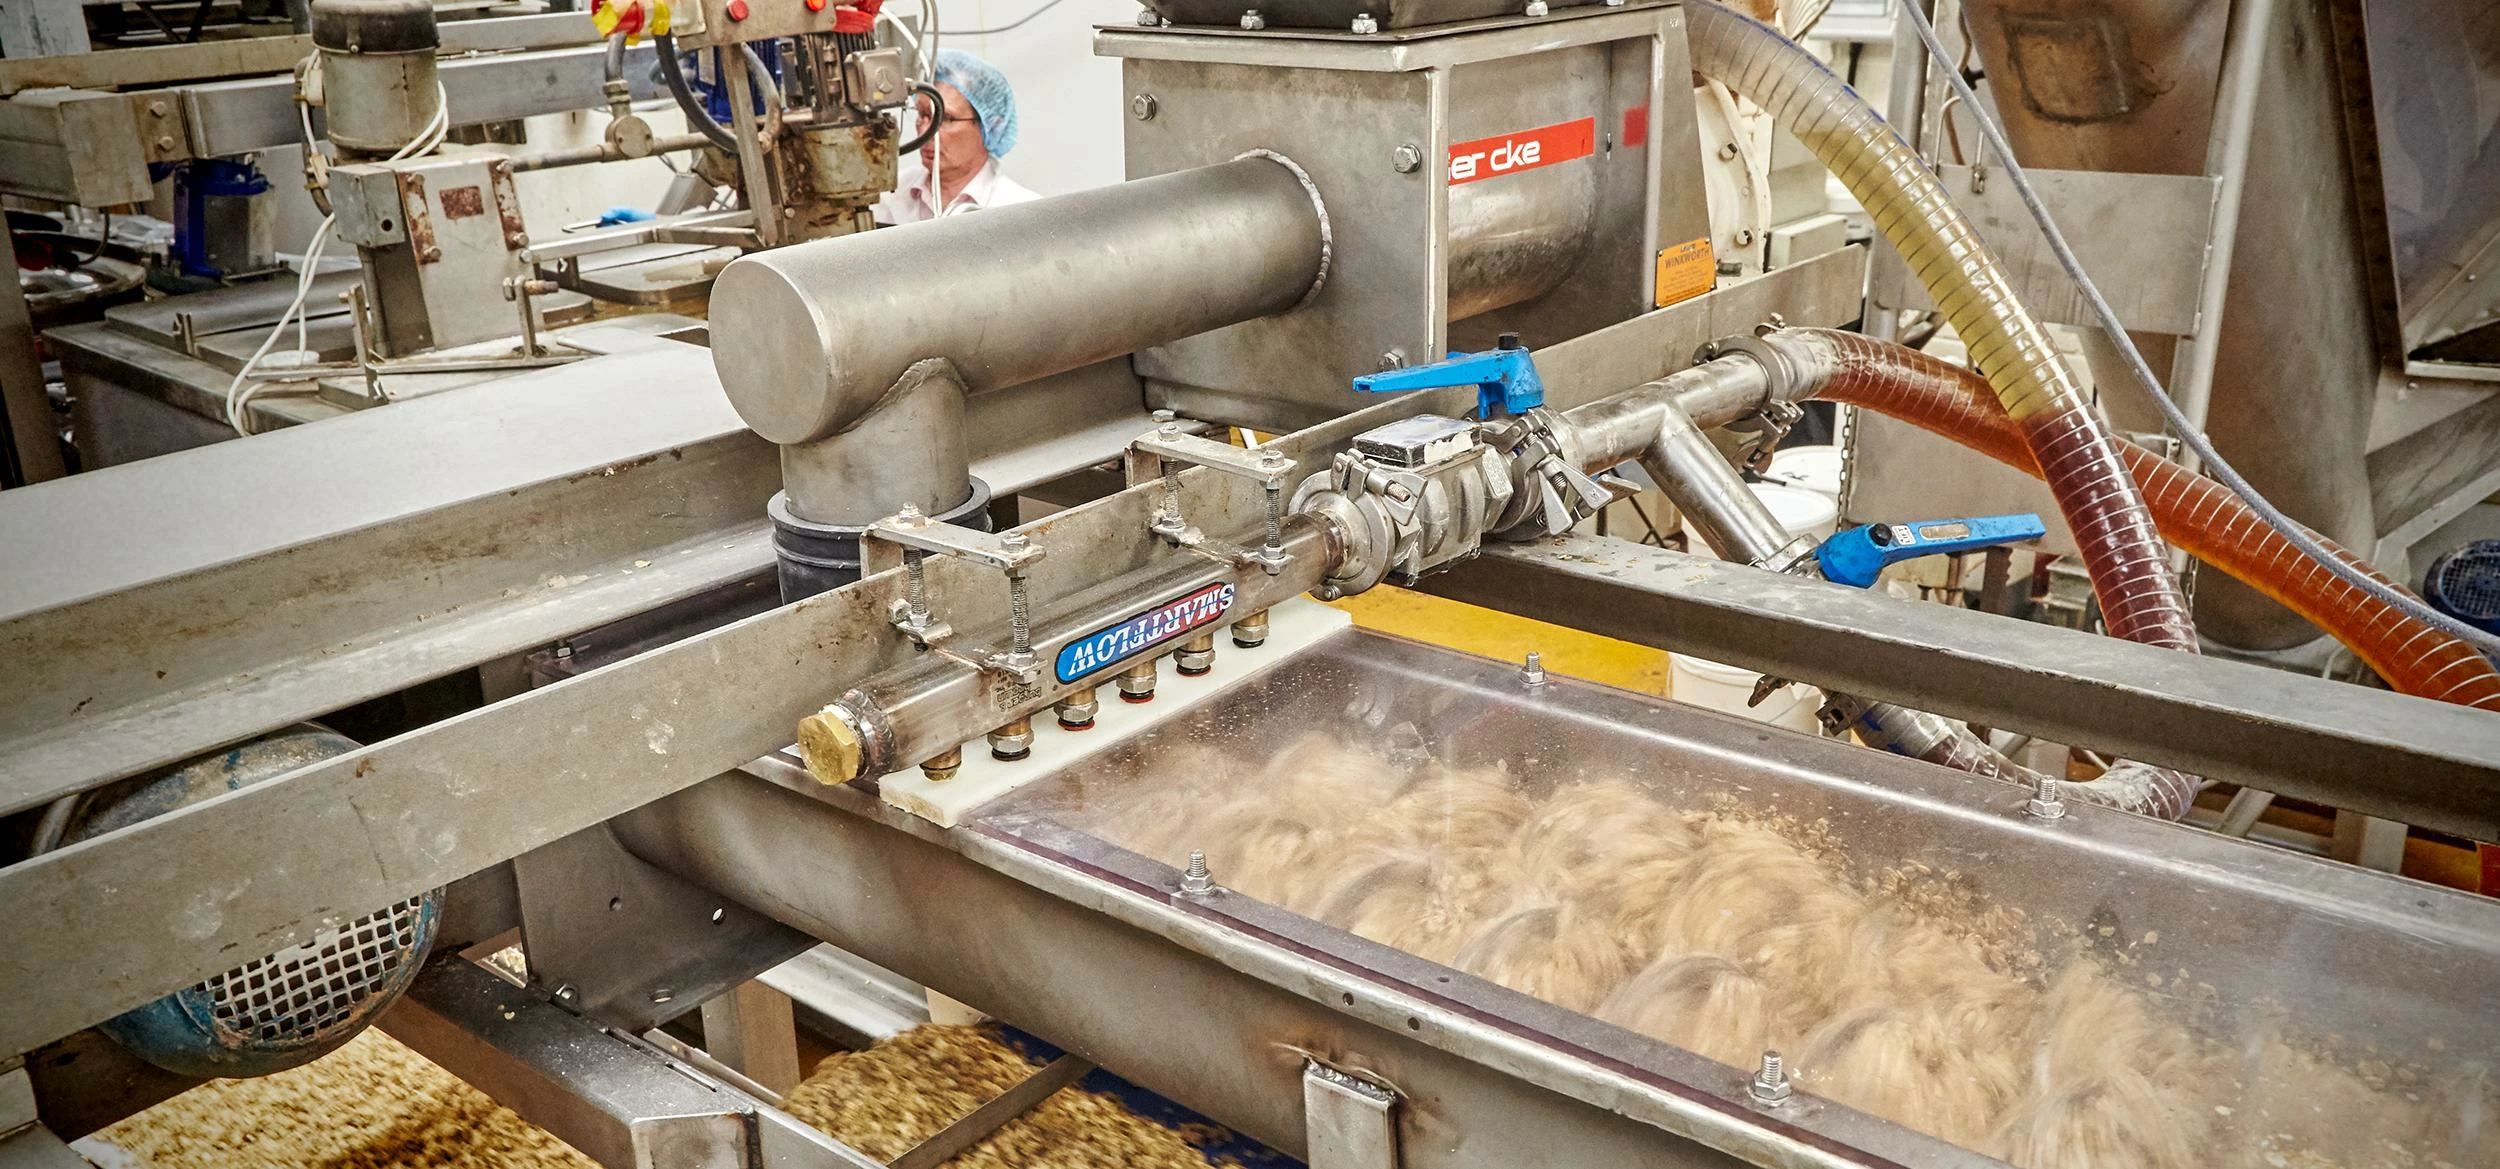 MasoSine pumps provide granola ingredient measurement at S Moores